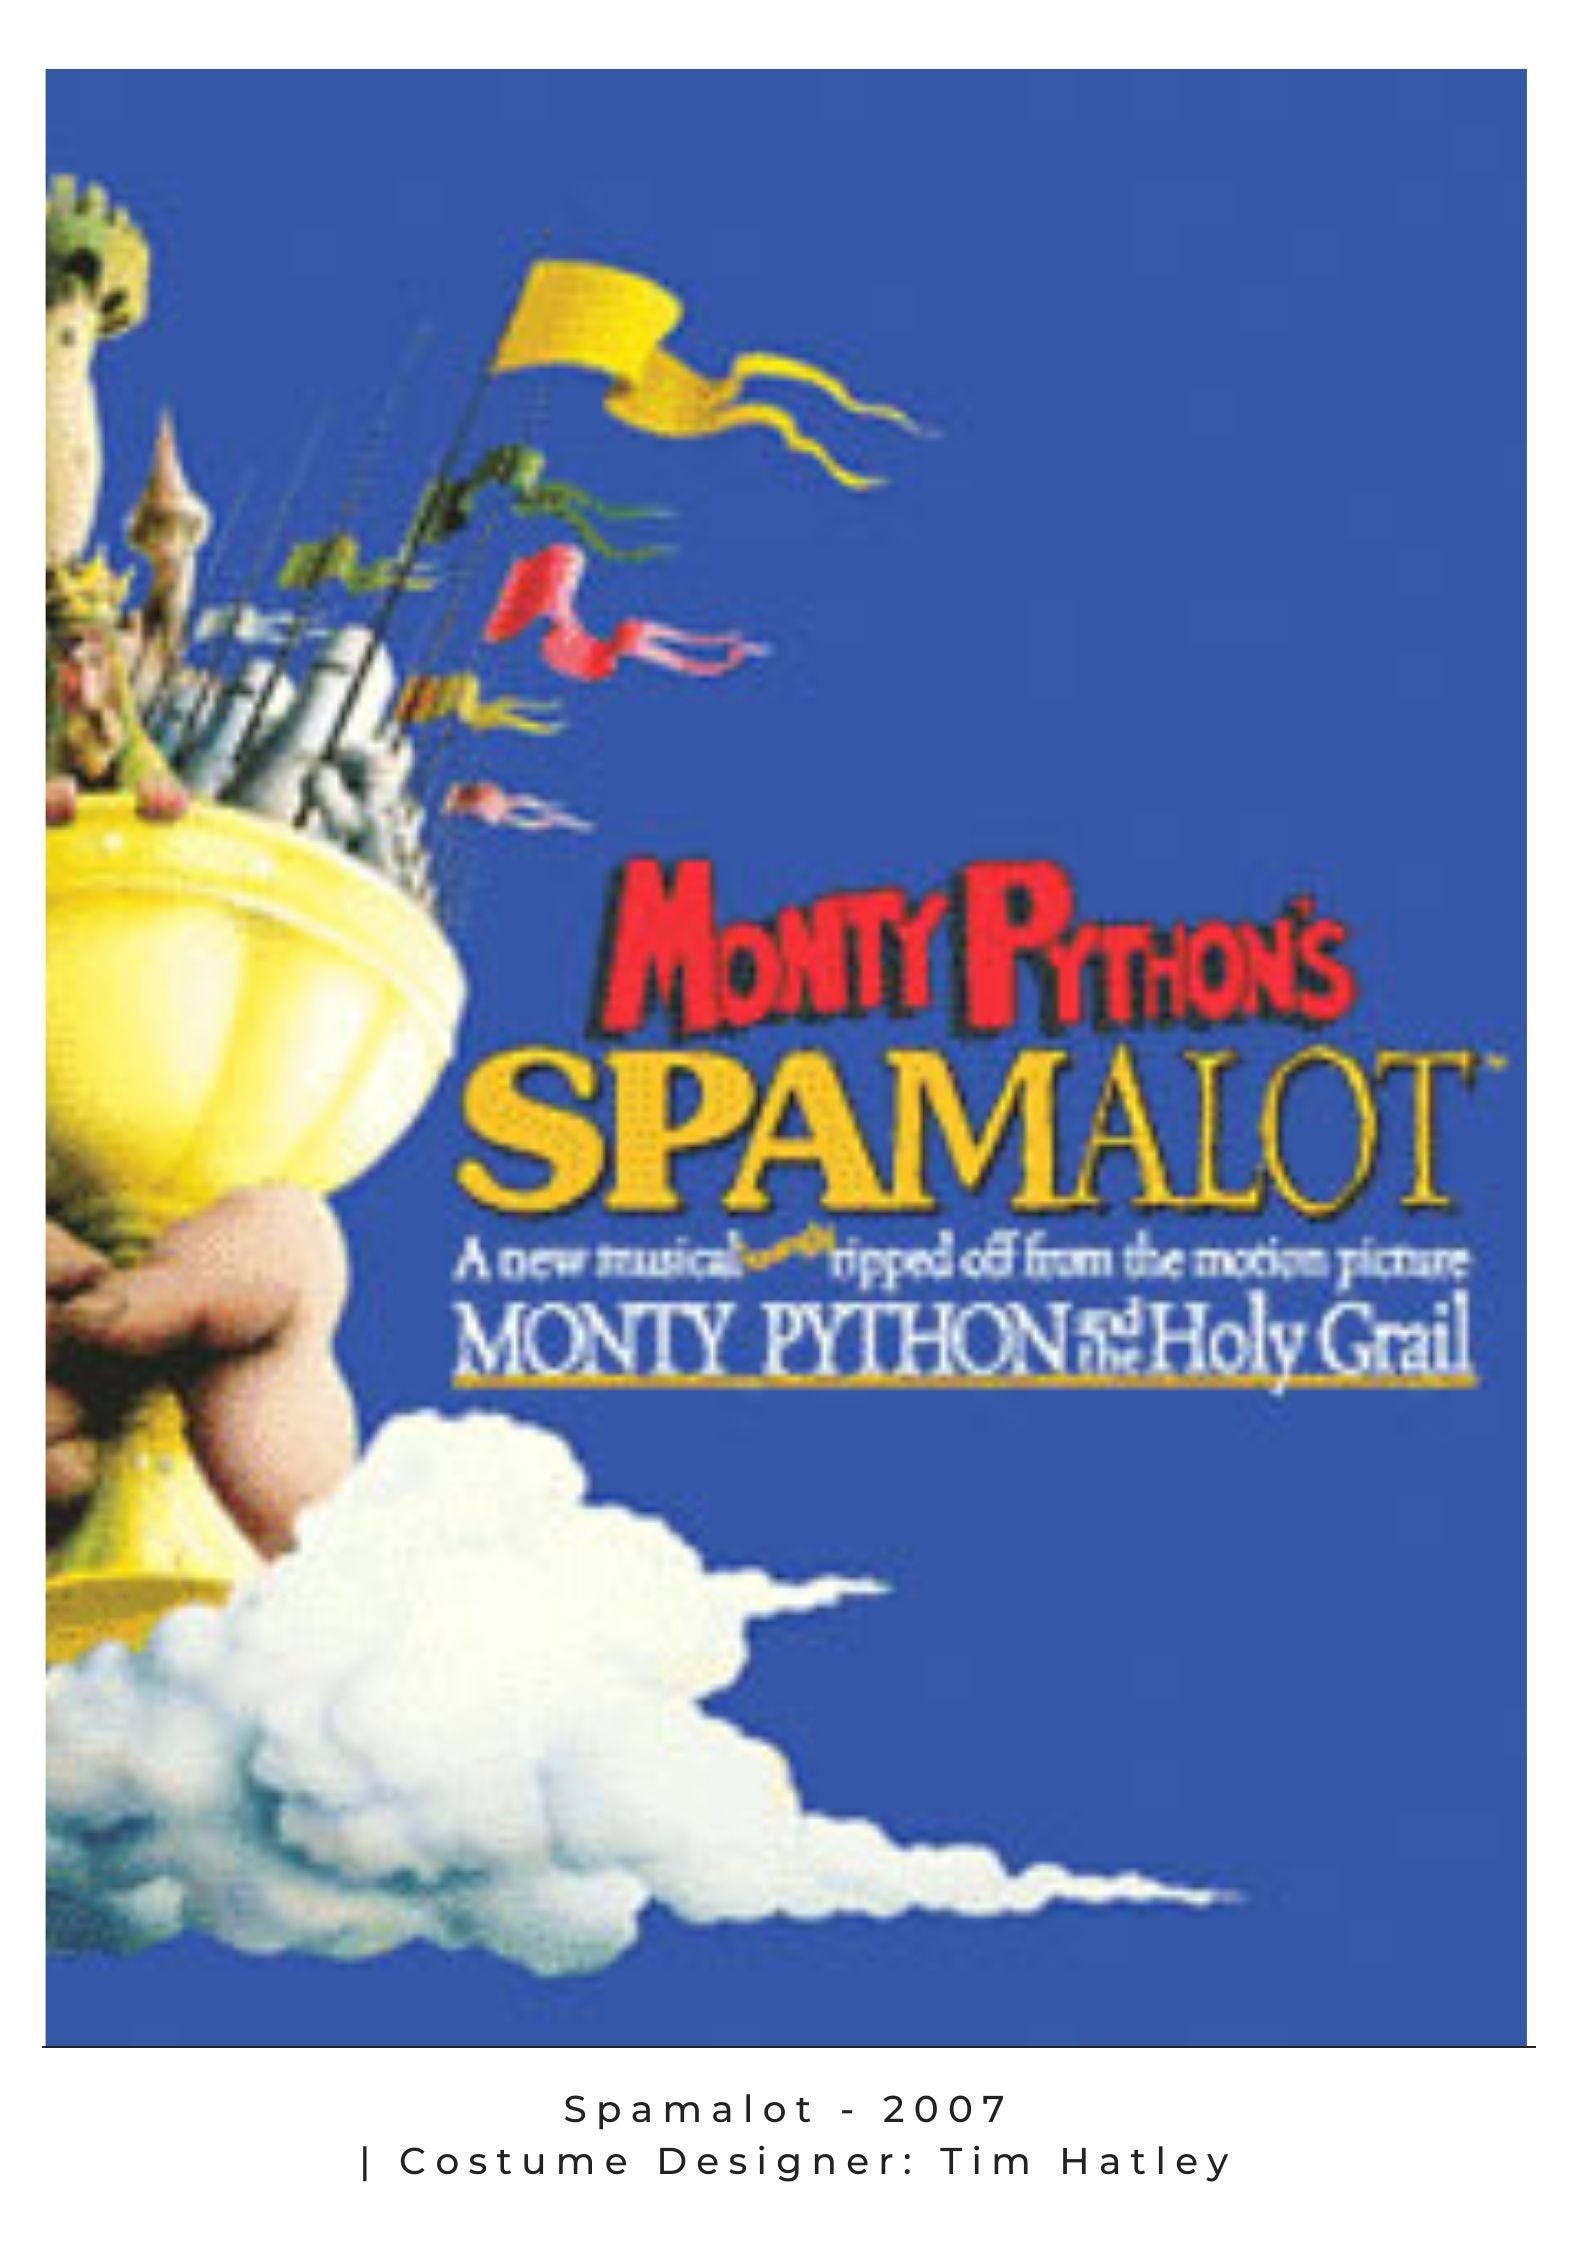 Monty Python's Spamalot Entertainment Industry Theatre Movie Work Costume Construction Work Costume Designer